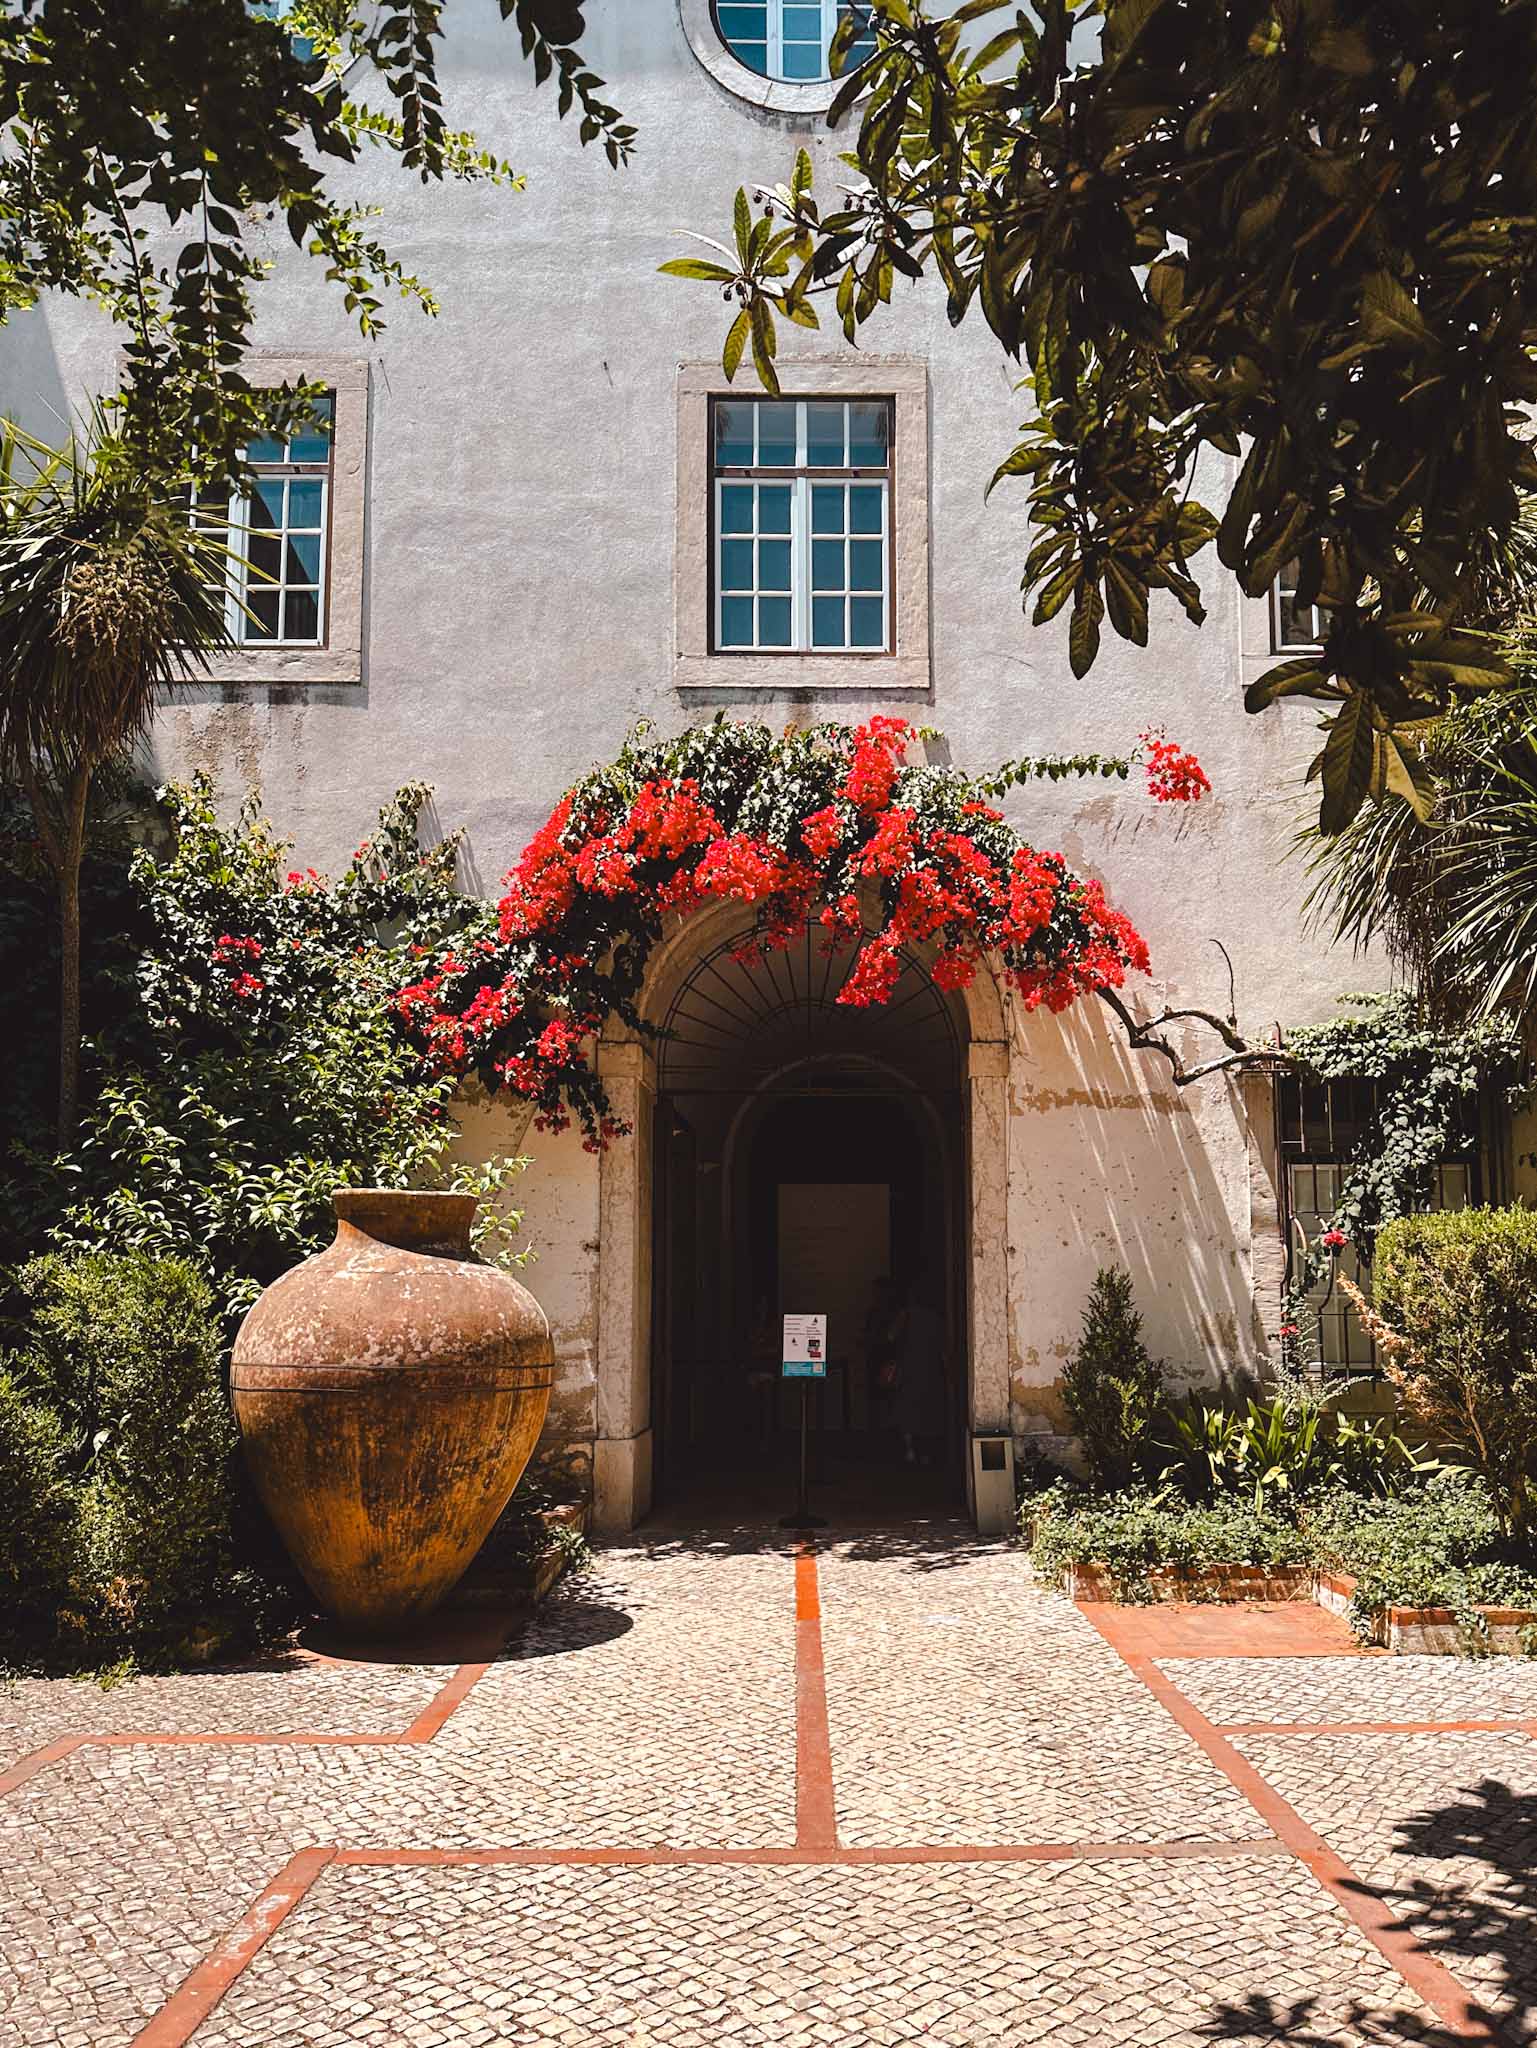 Best Instagram photo spots in Lisbon, Portugal - National Tile Museum